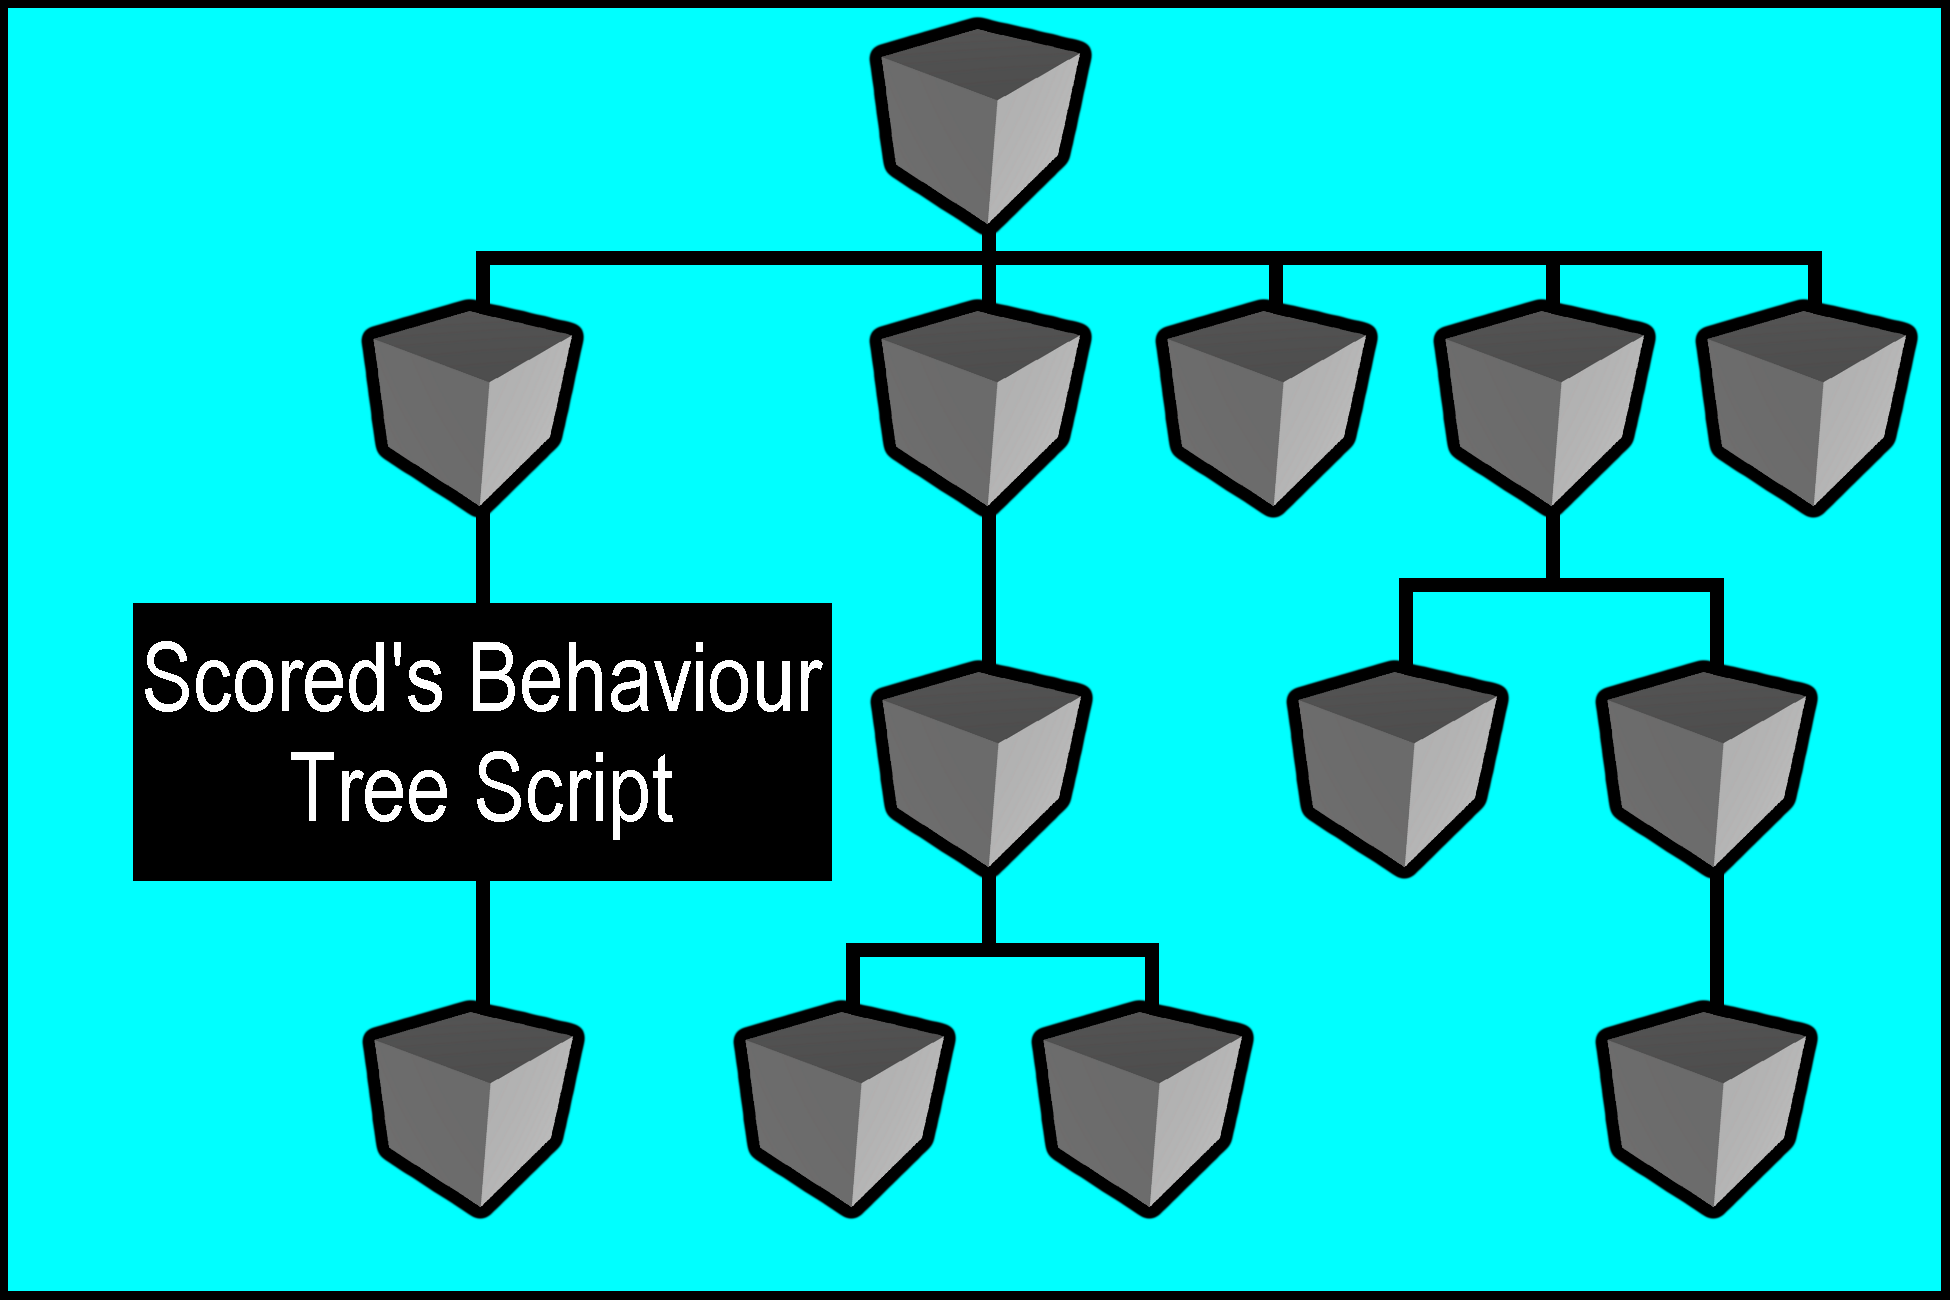 Scored's Behaviour Tree Script